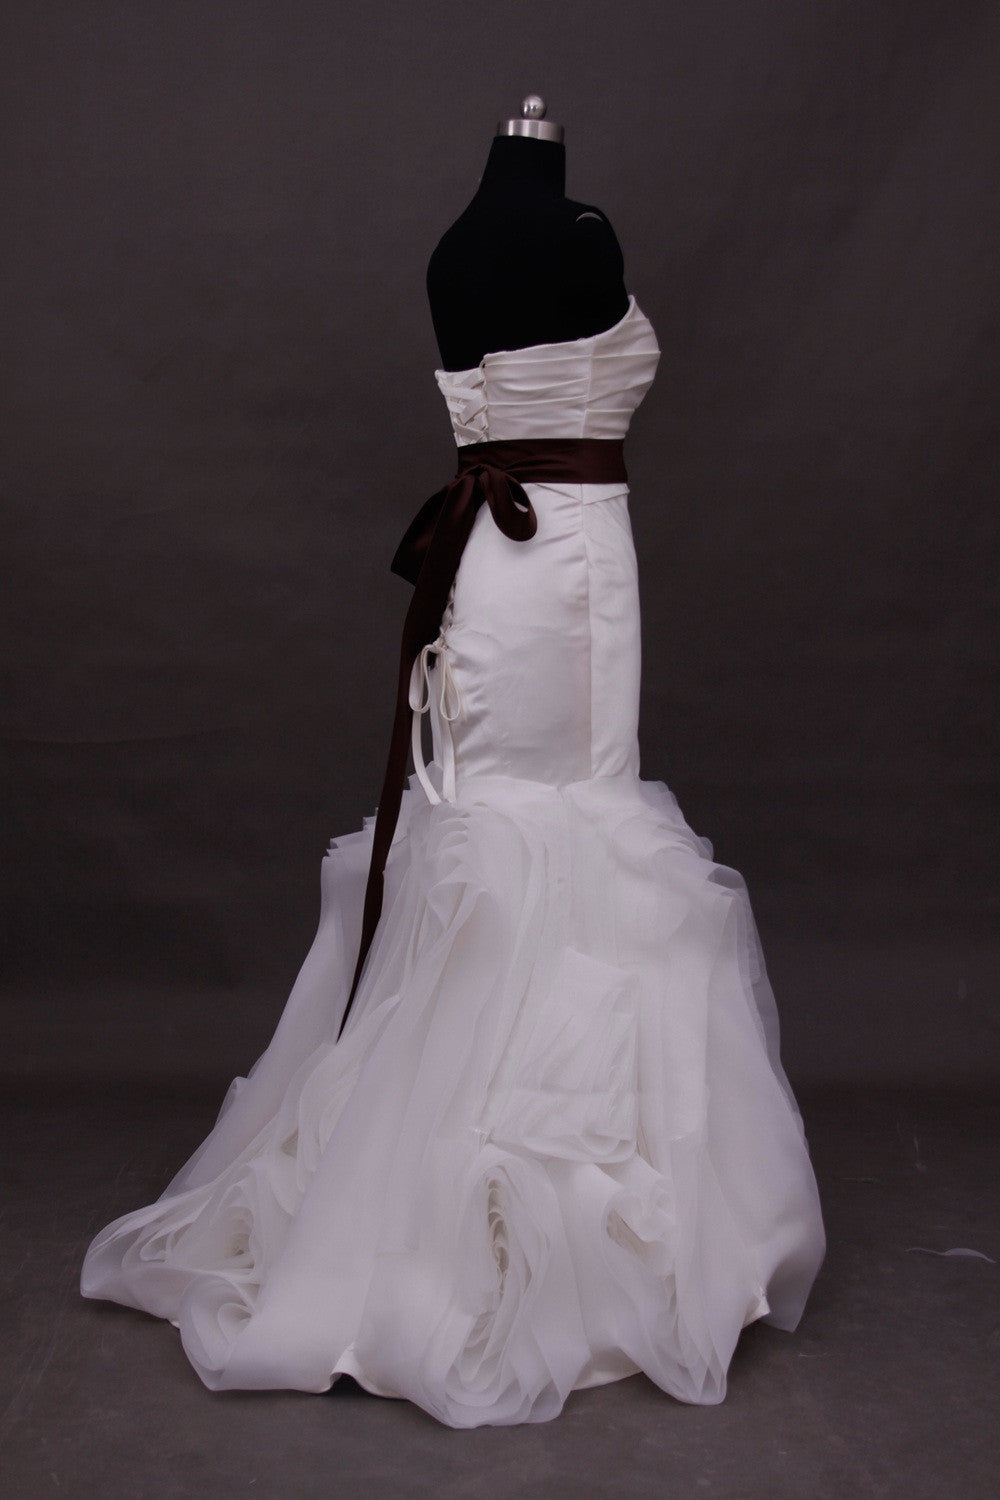 Mermaid swirled wedding dress with brown sash